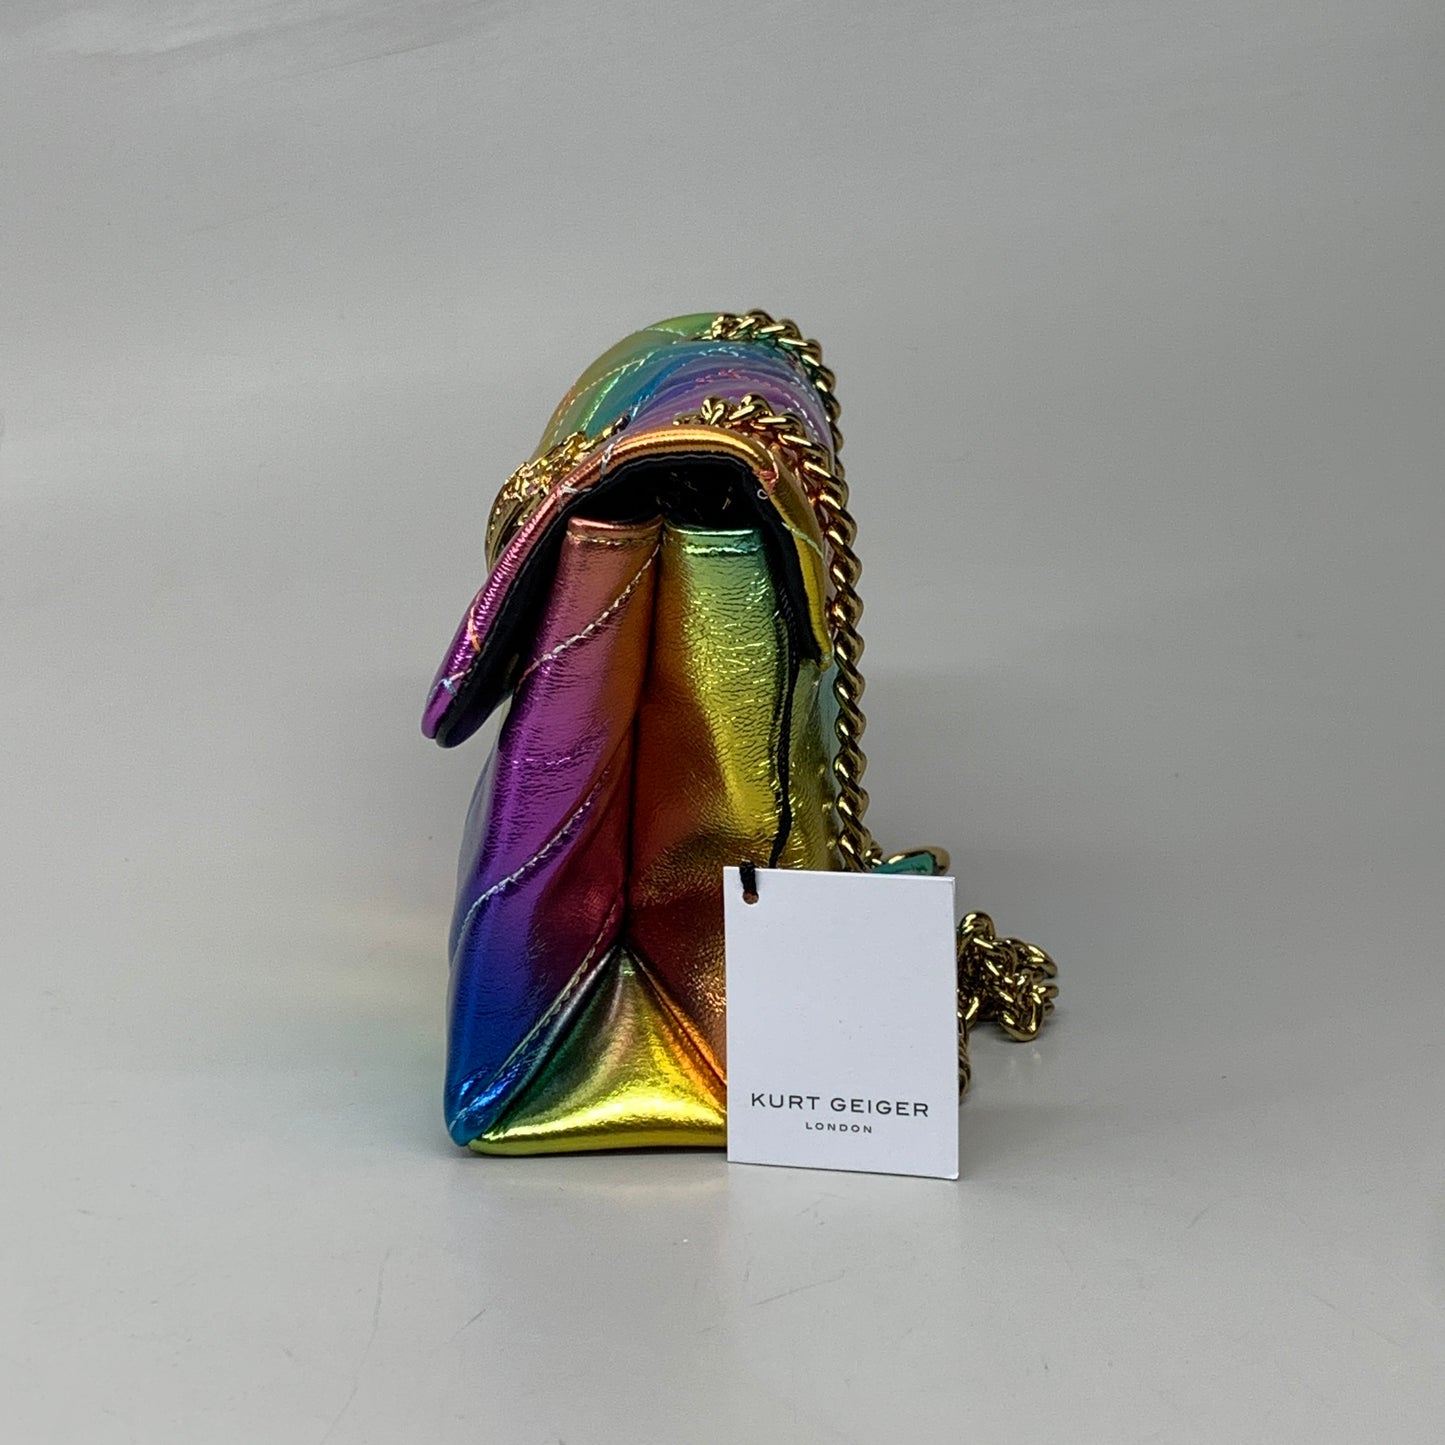 KURT GEIGER Kensington Leather Rainbow Day Bag 8" x 6" Rainbow 9796969109 New